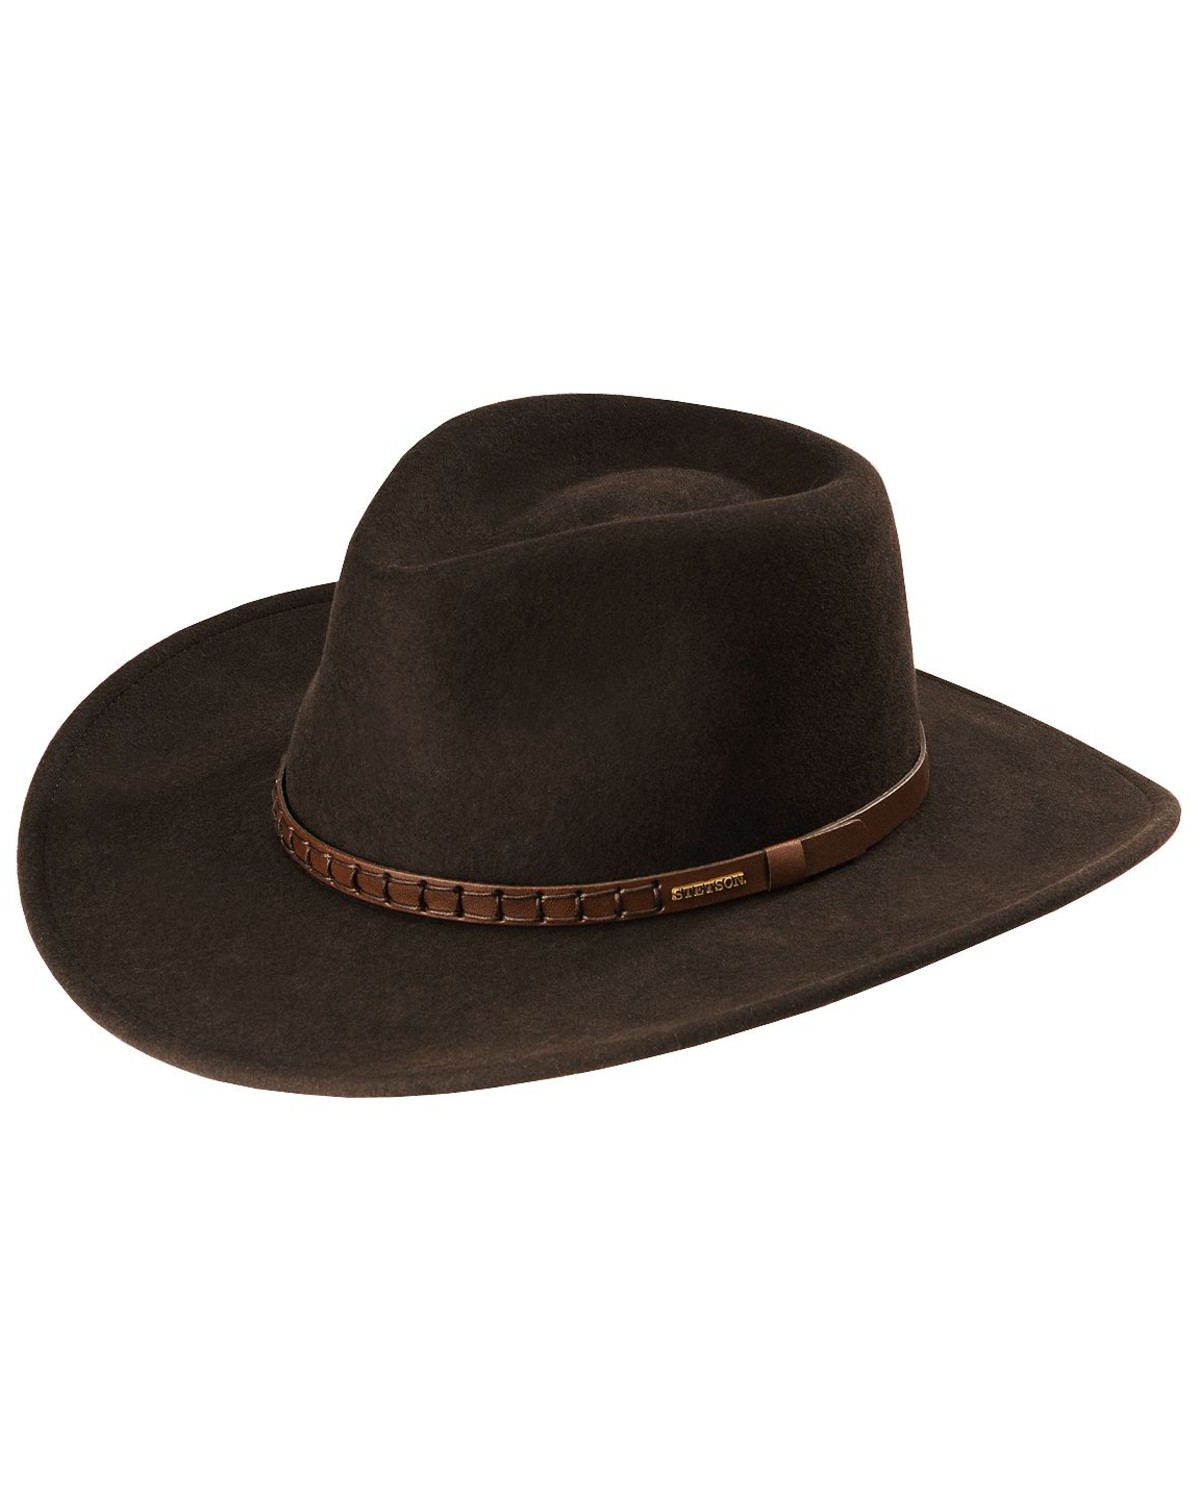 Twstgs-813008 Cordova Stetson Mens Sturgis Pinchfront Crushable Wool Felt Hat 